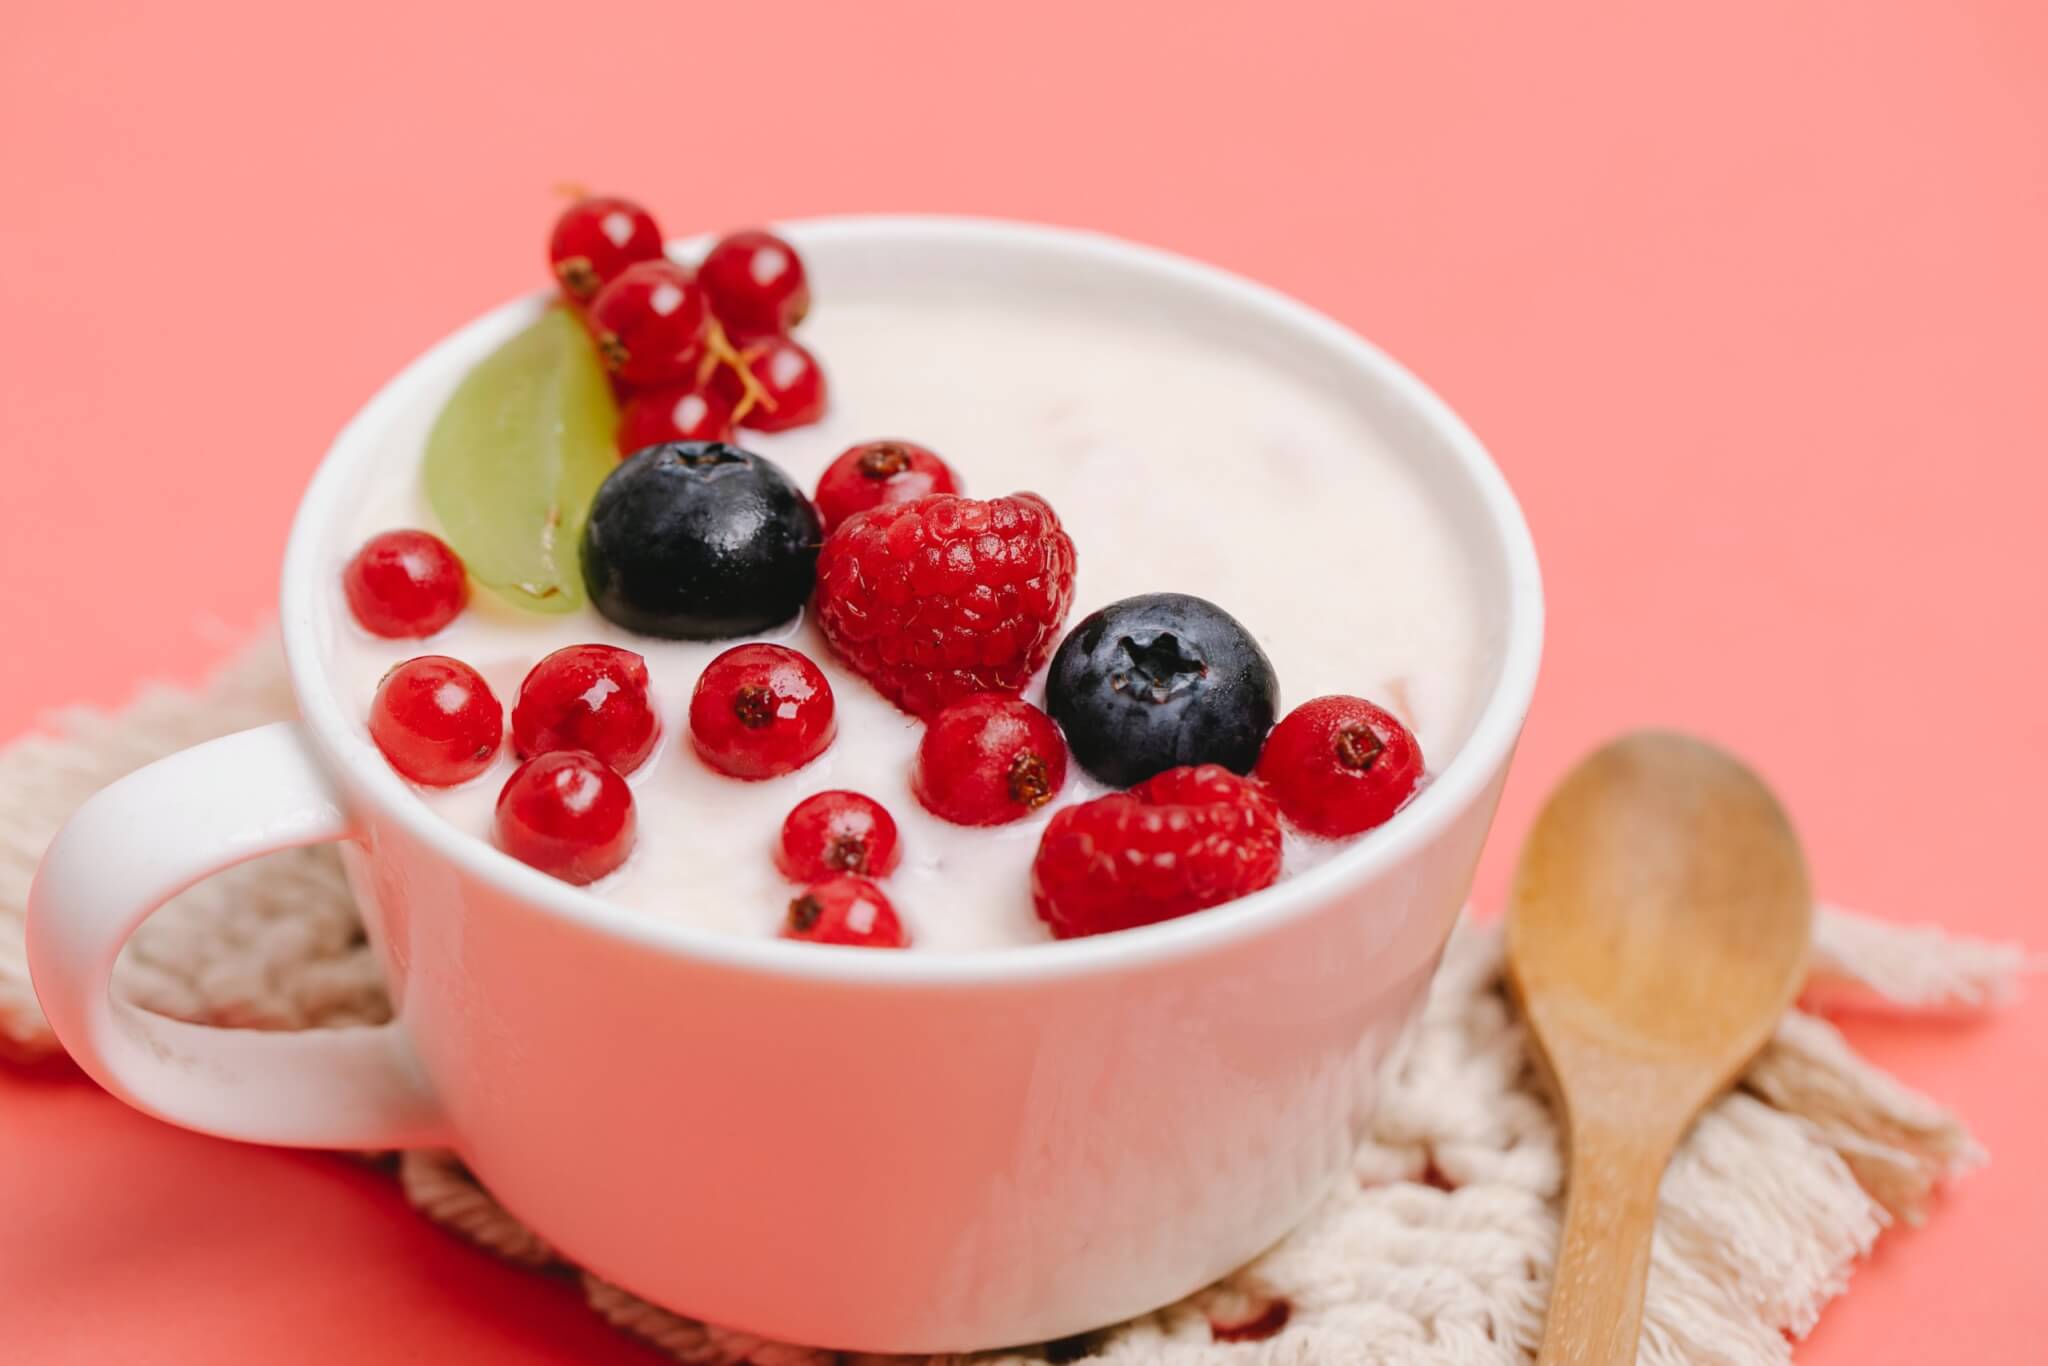 5 Health Benefits From Eating Yogurt Regularly, According To Science